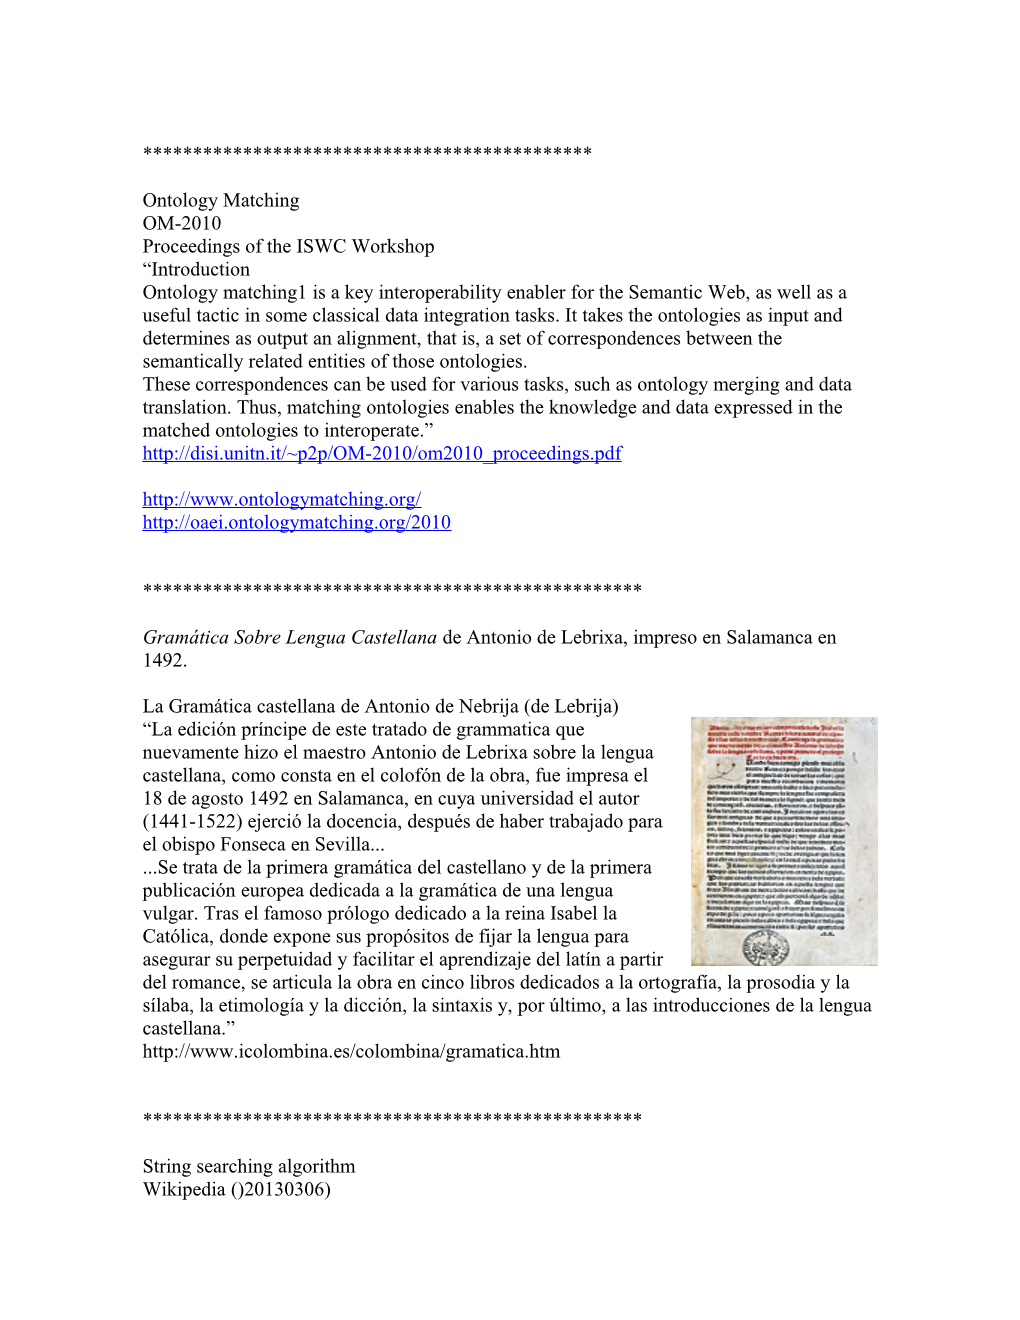 Proceedings of the ISWC Workshop